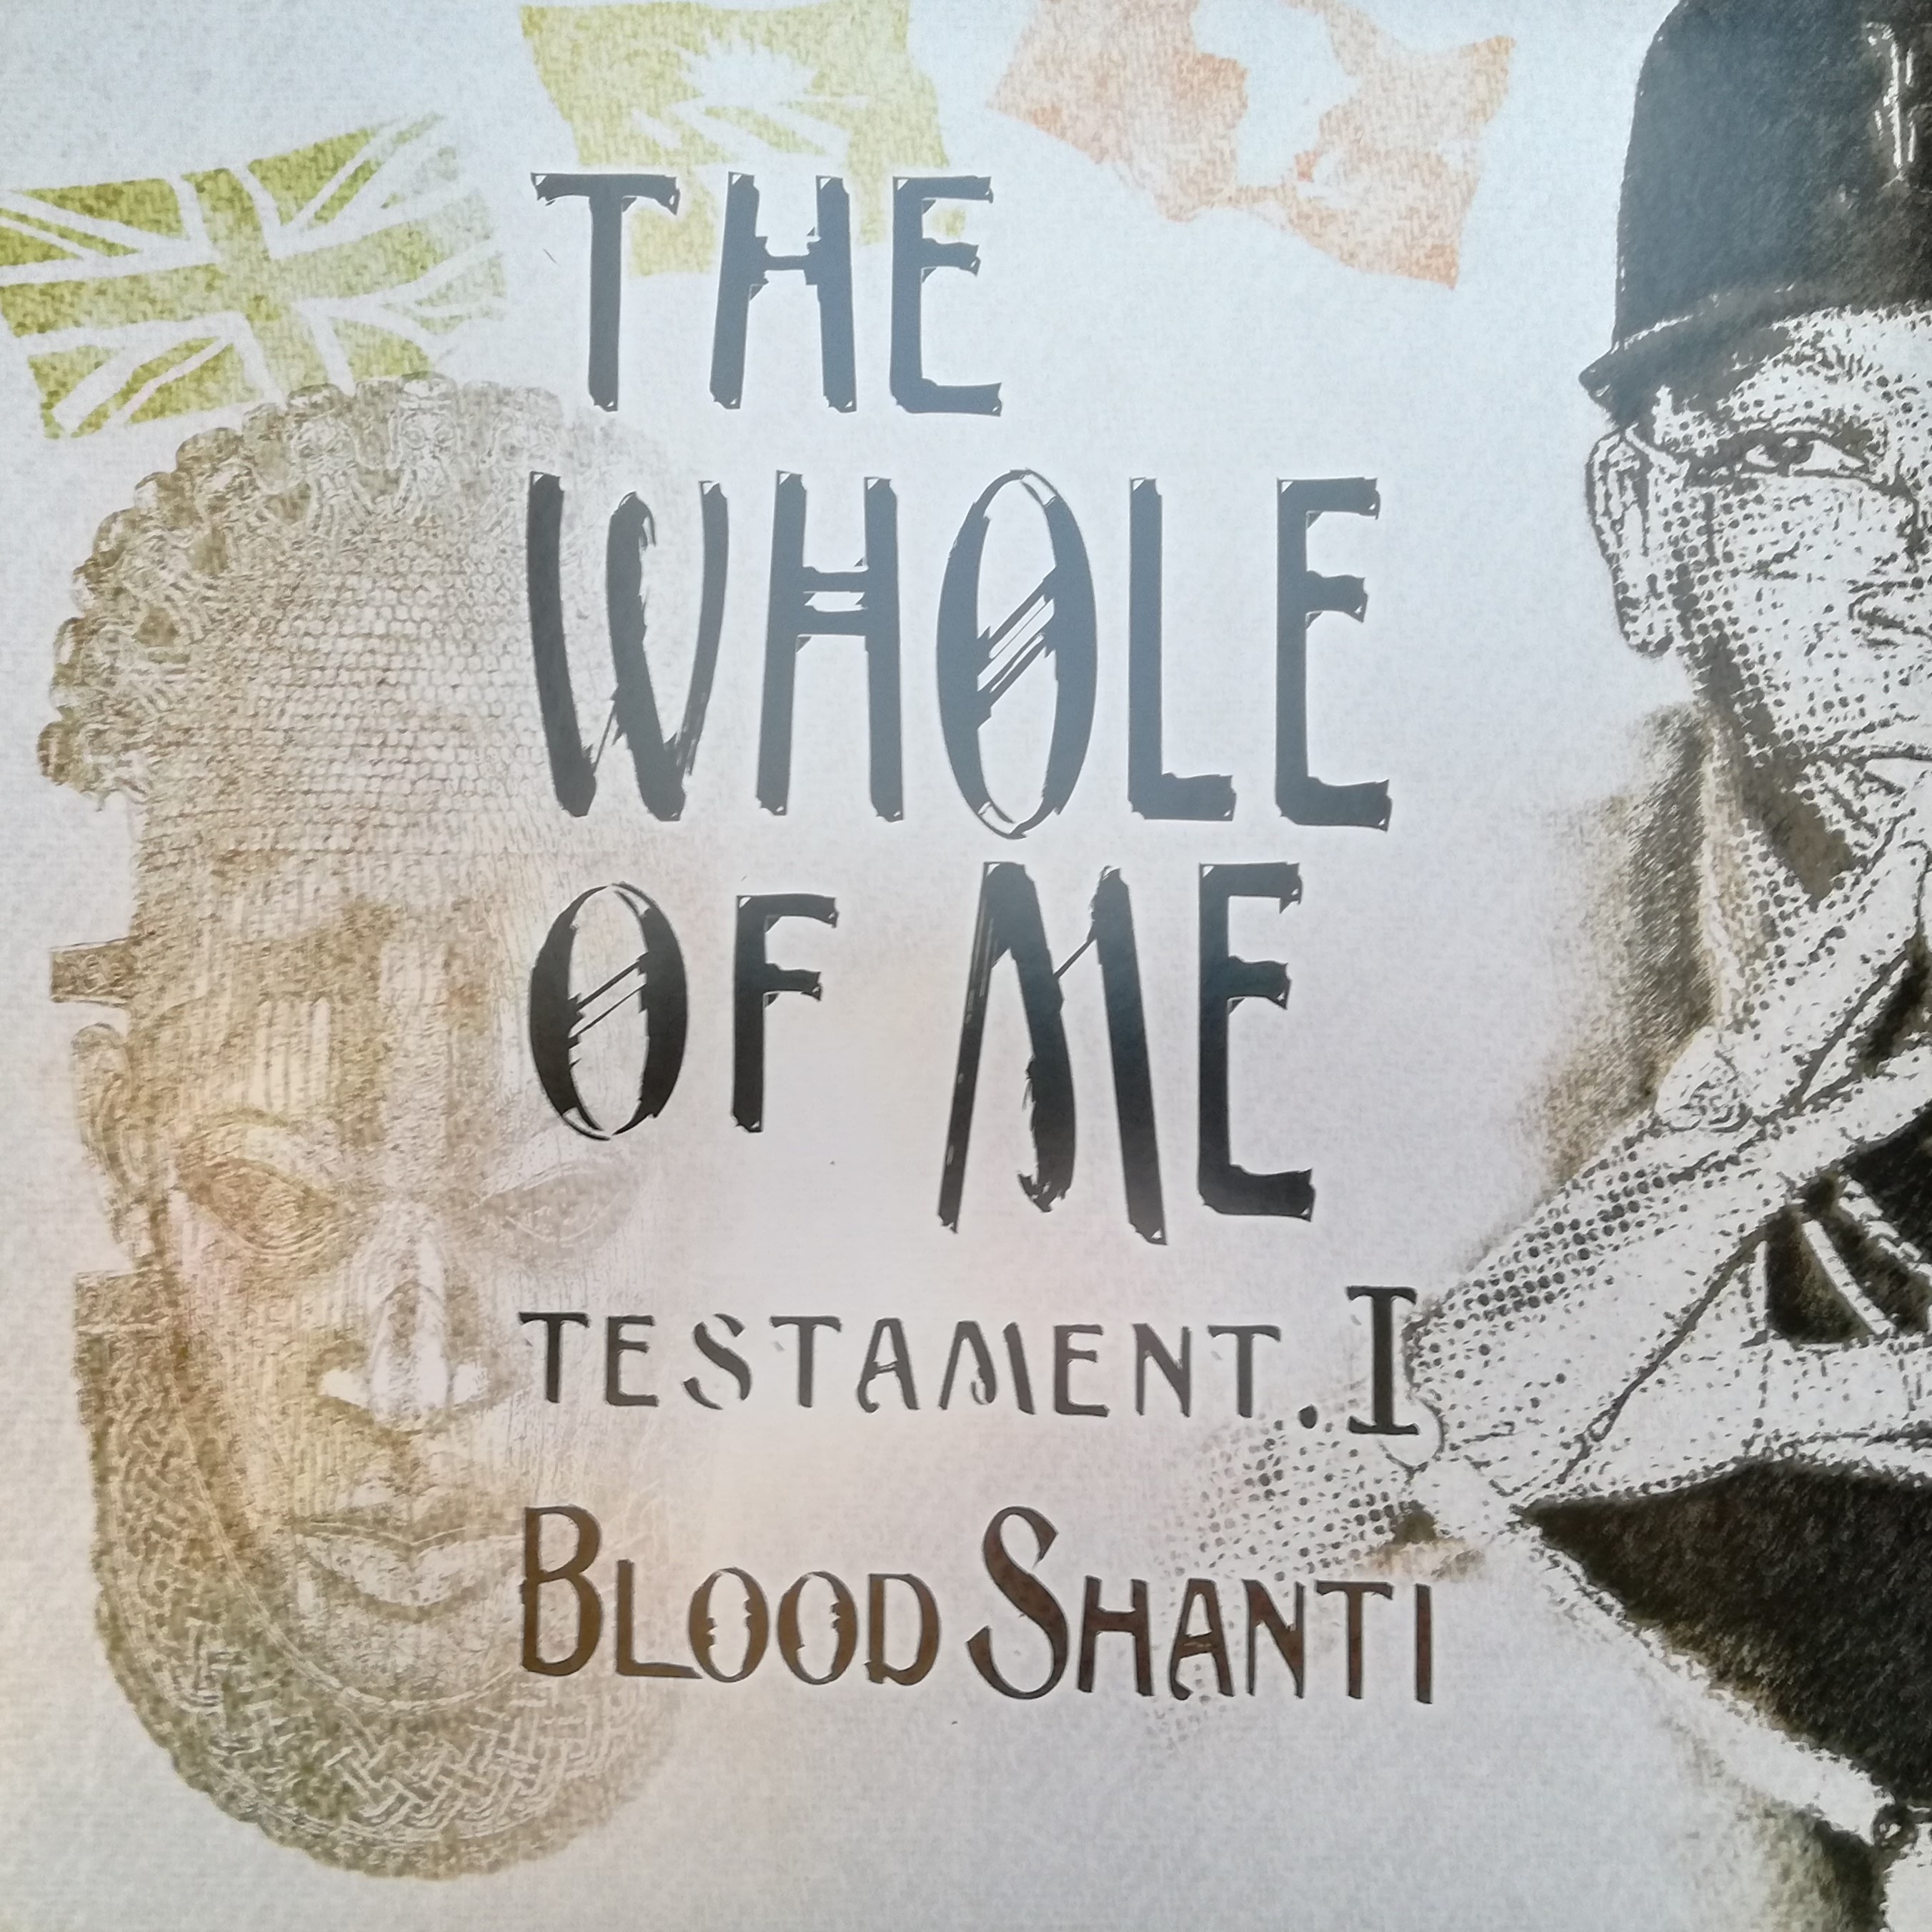 LP BLOOD SHANTI - THE WHOLE OF ME - TESTAMENT 1